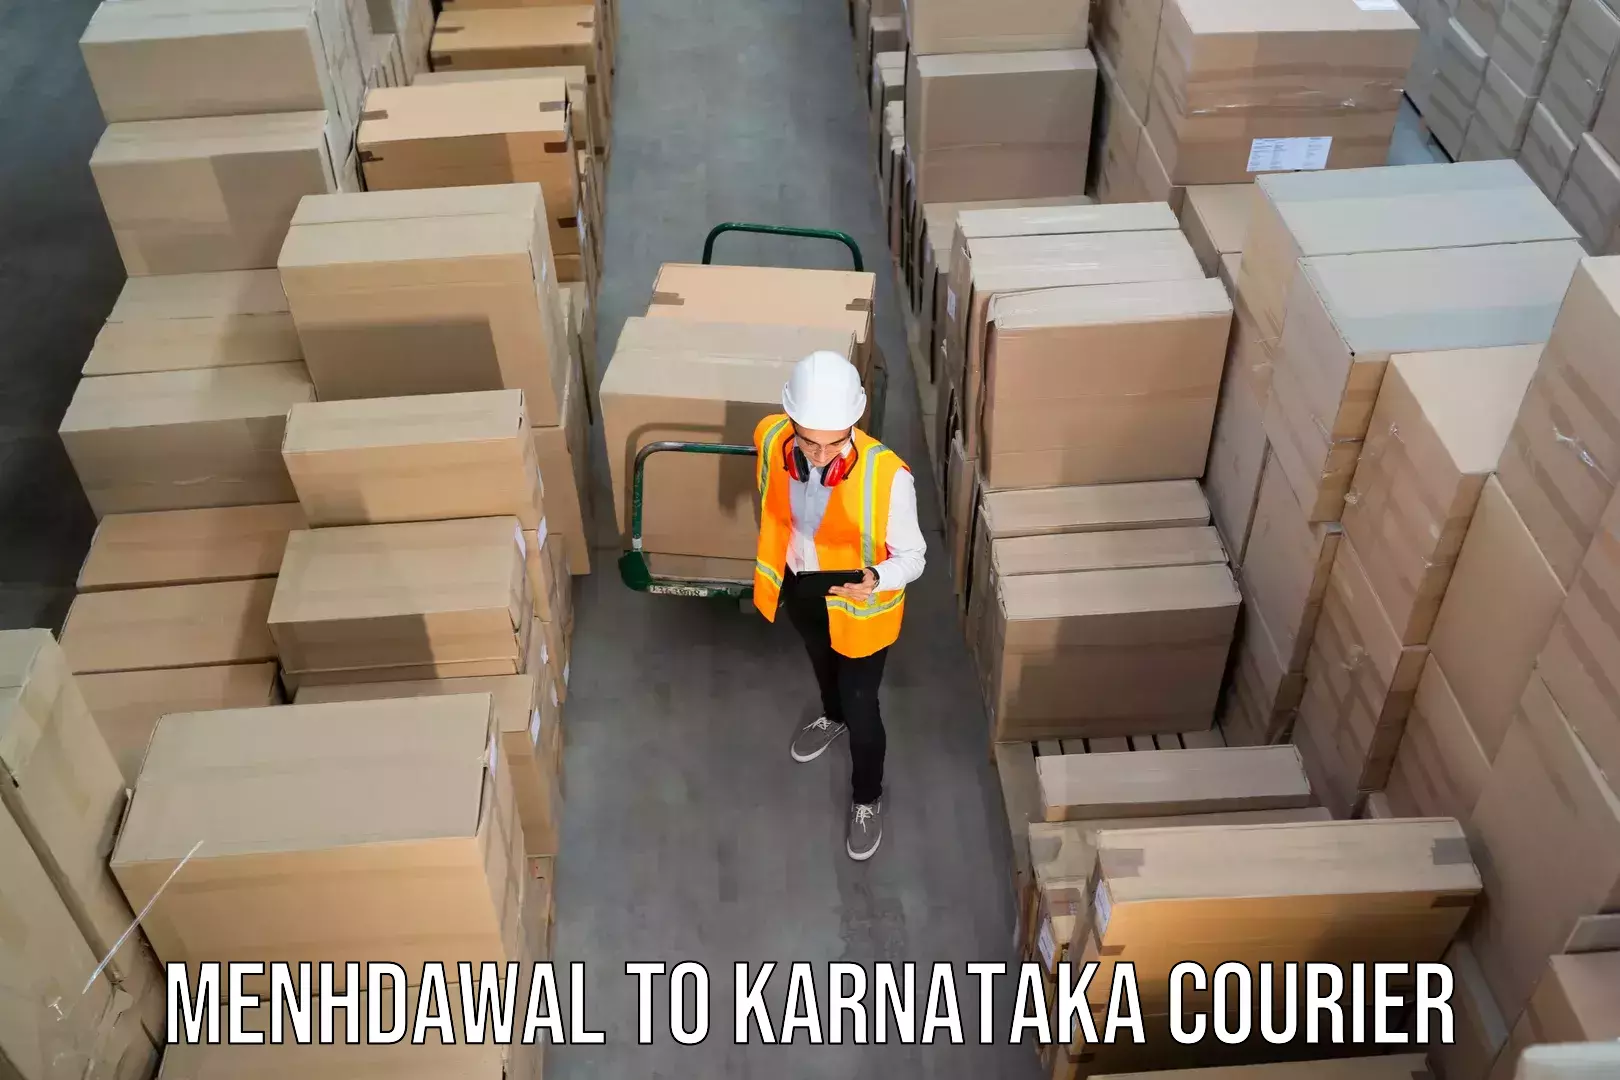 Cash on delivery service Menhdawal to Karnataka